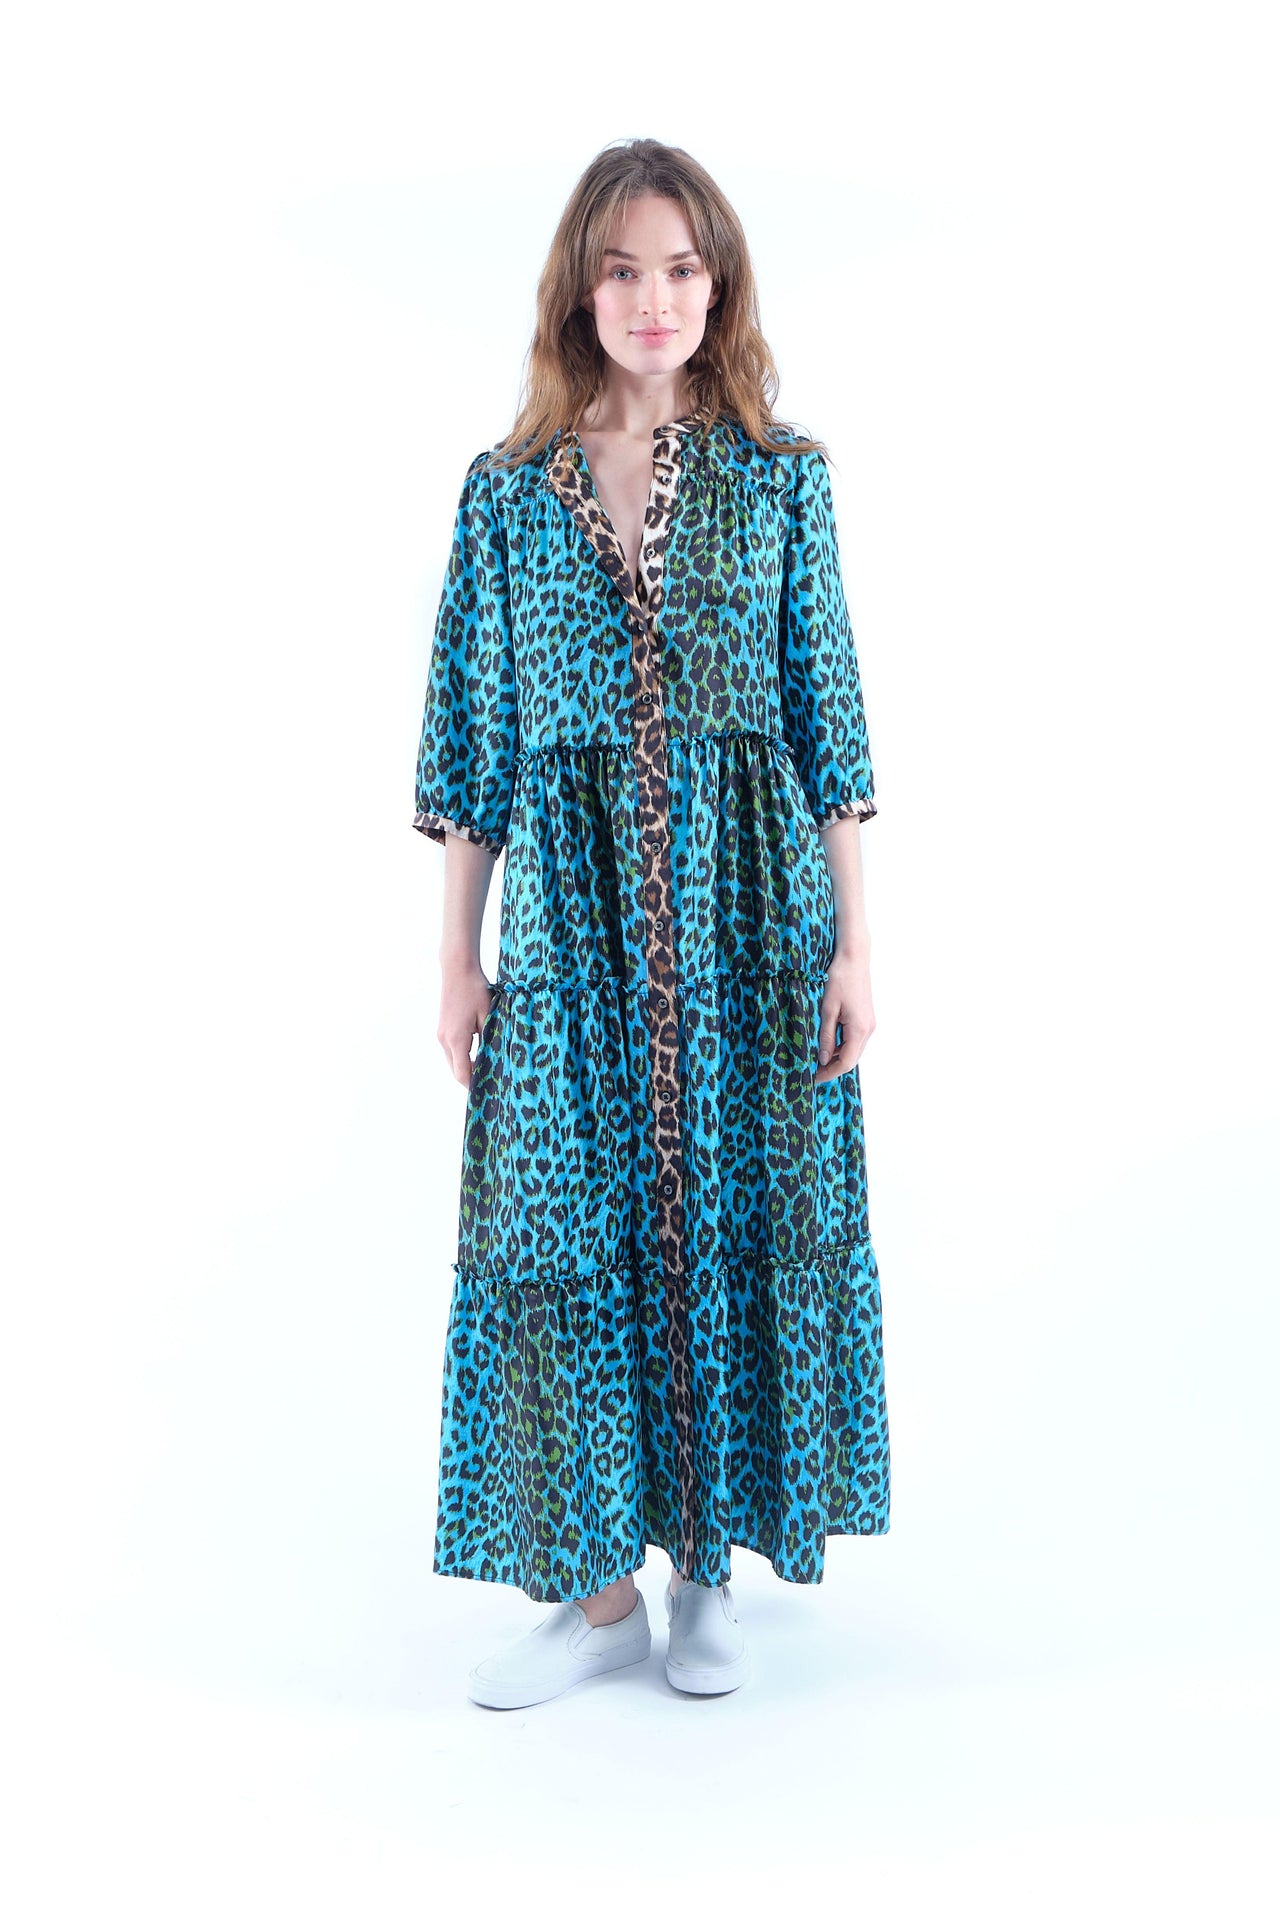 FLORE DRESS IN AQUA-Dress-La Prestic Ouiston-Debs Boutique